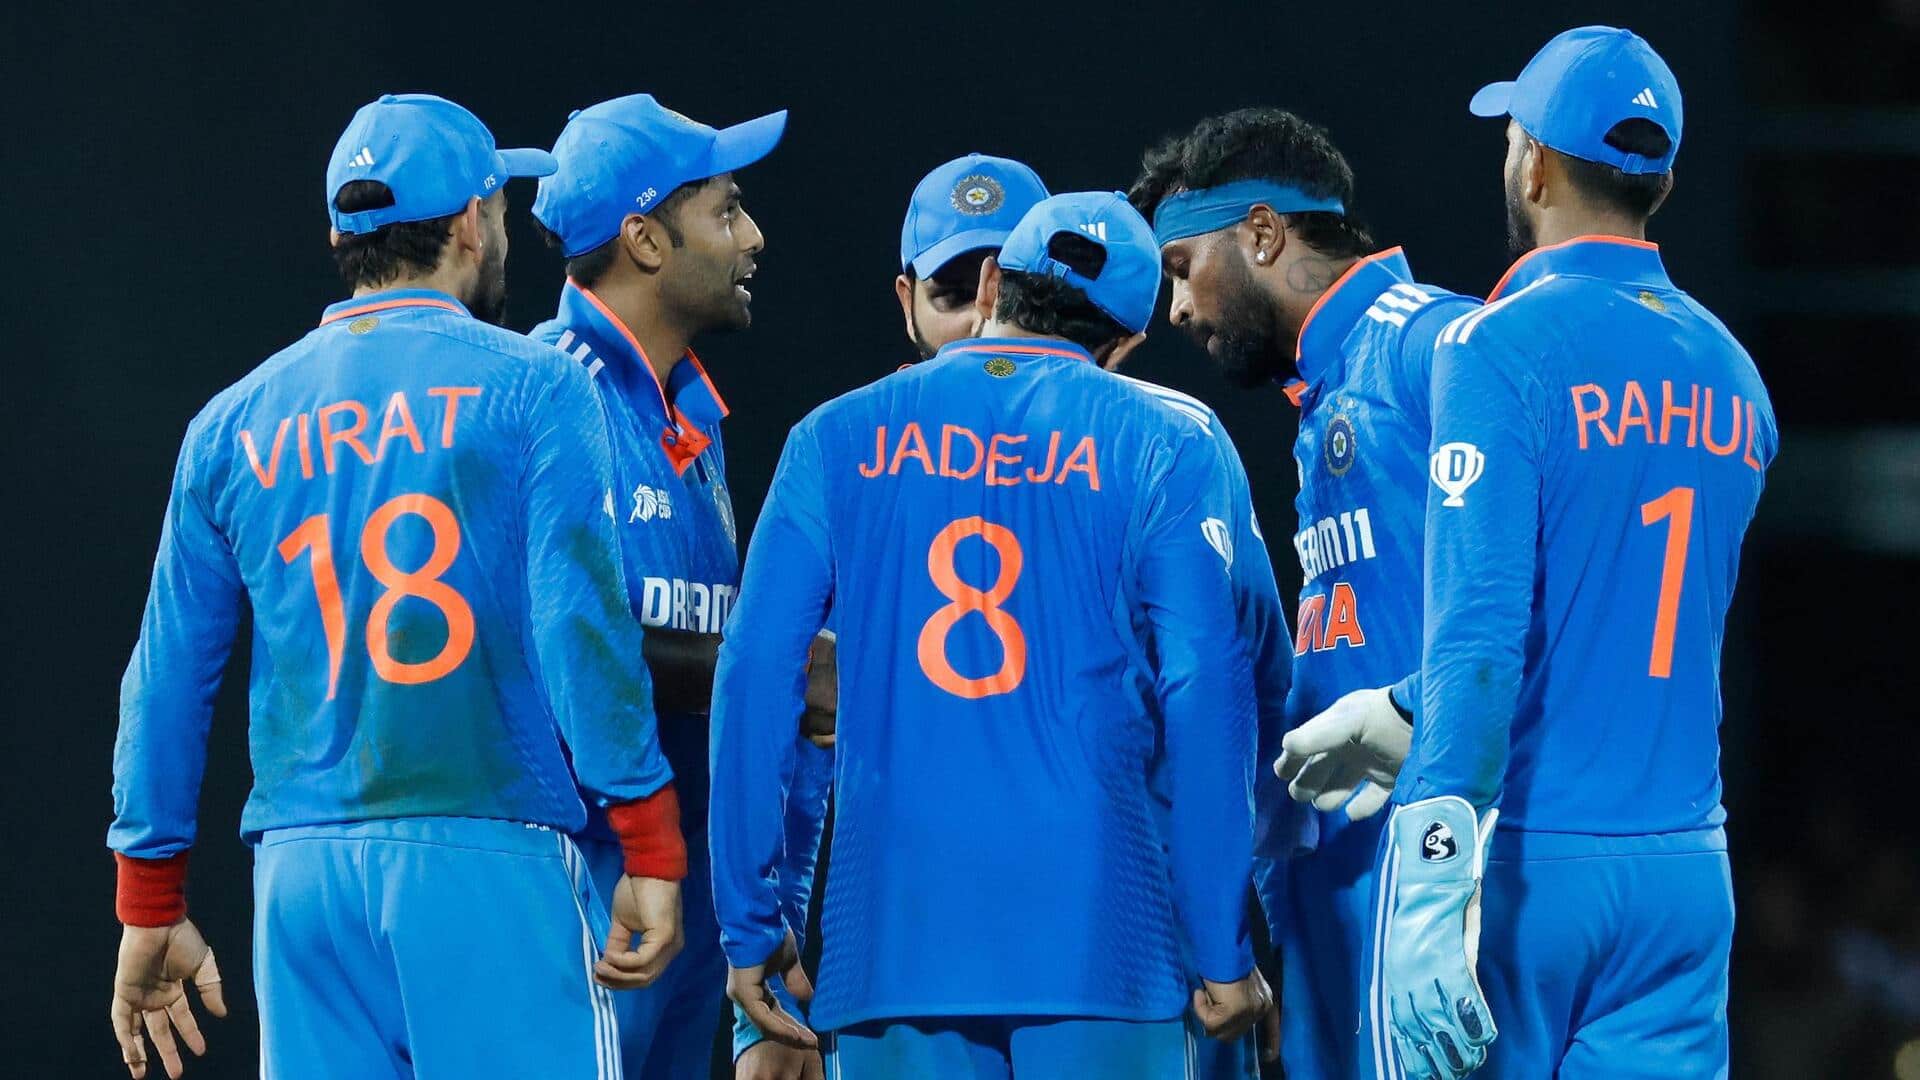 India snap SL's 13-match winning streak, reach Asia Cup final